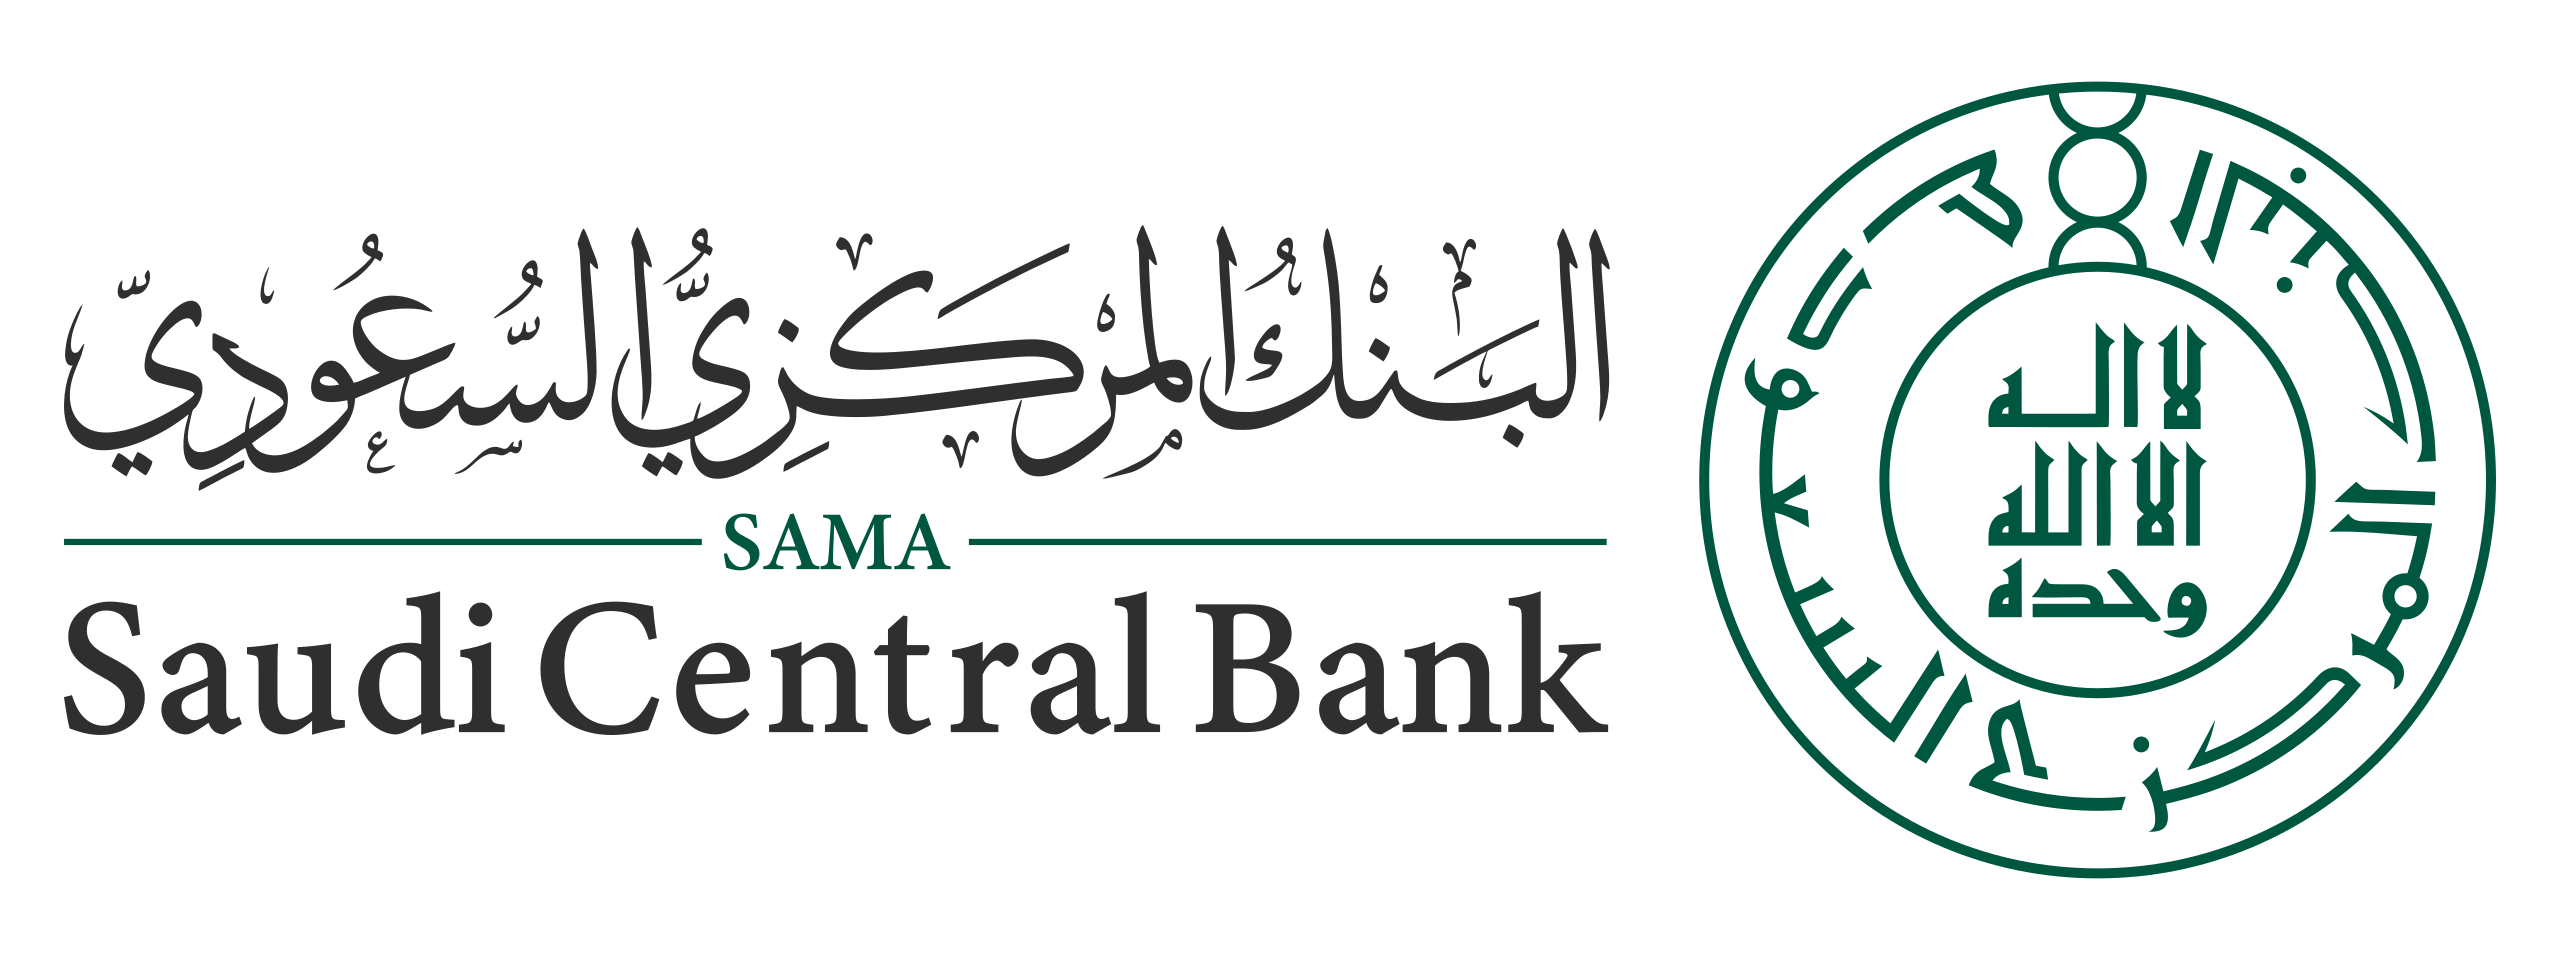 Saudi Central Bank